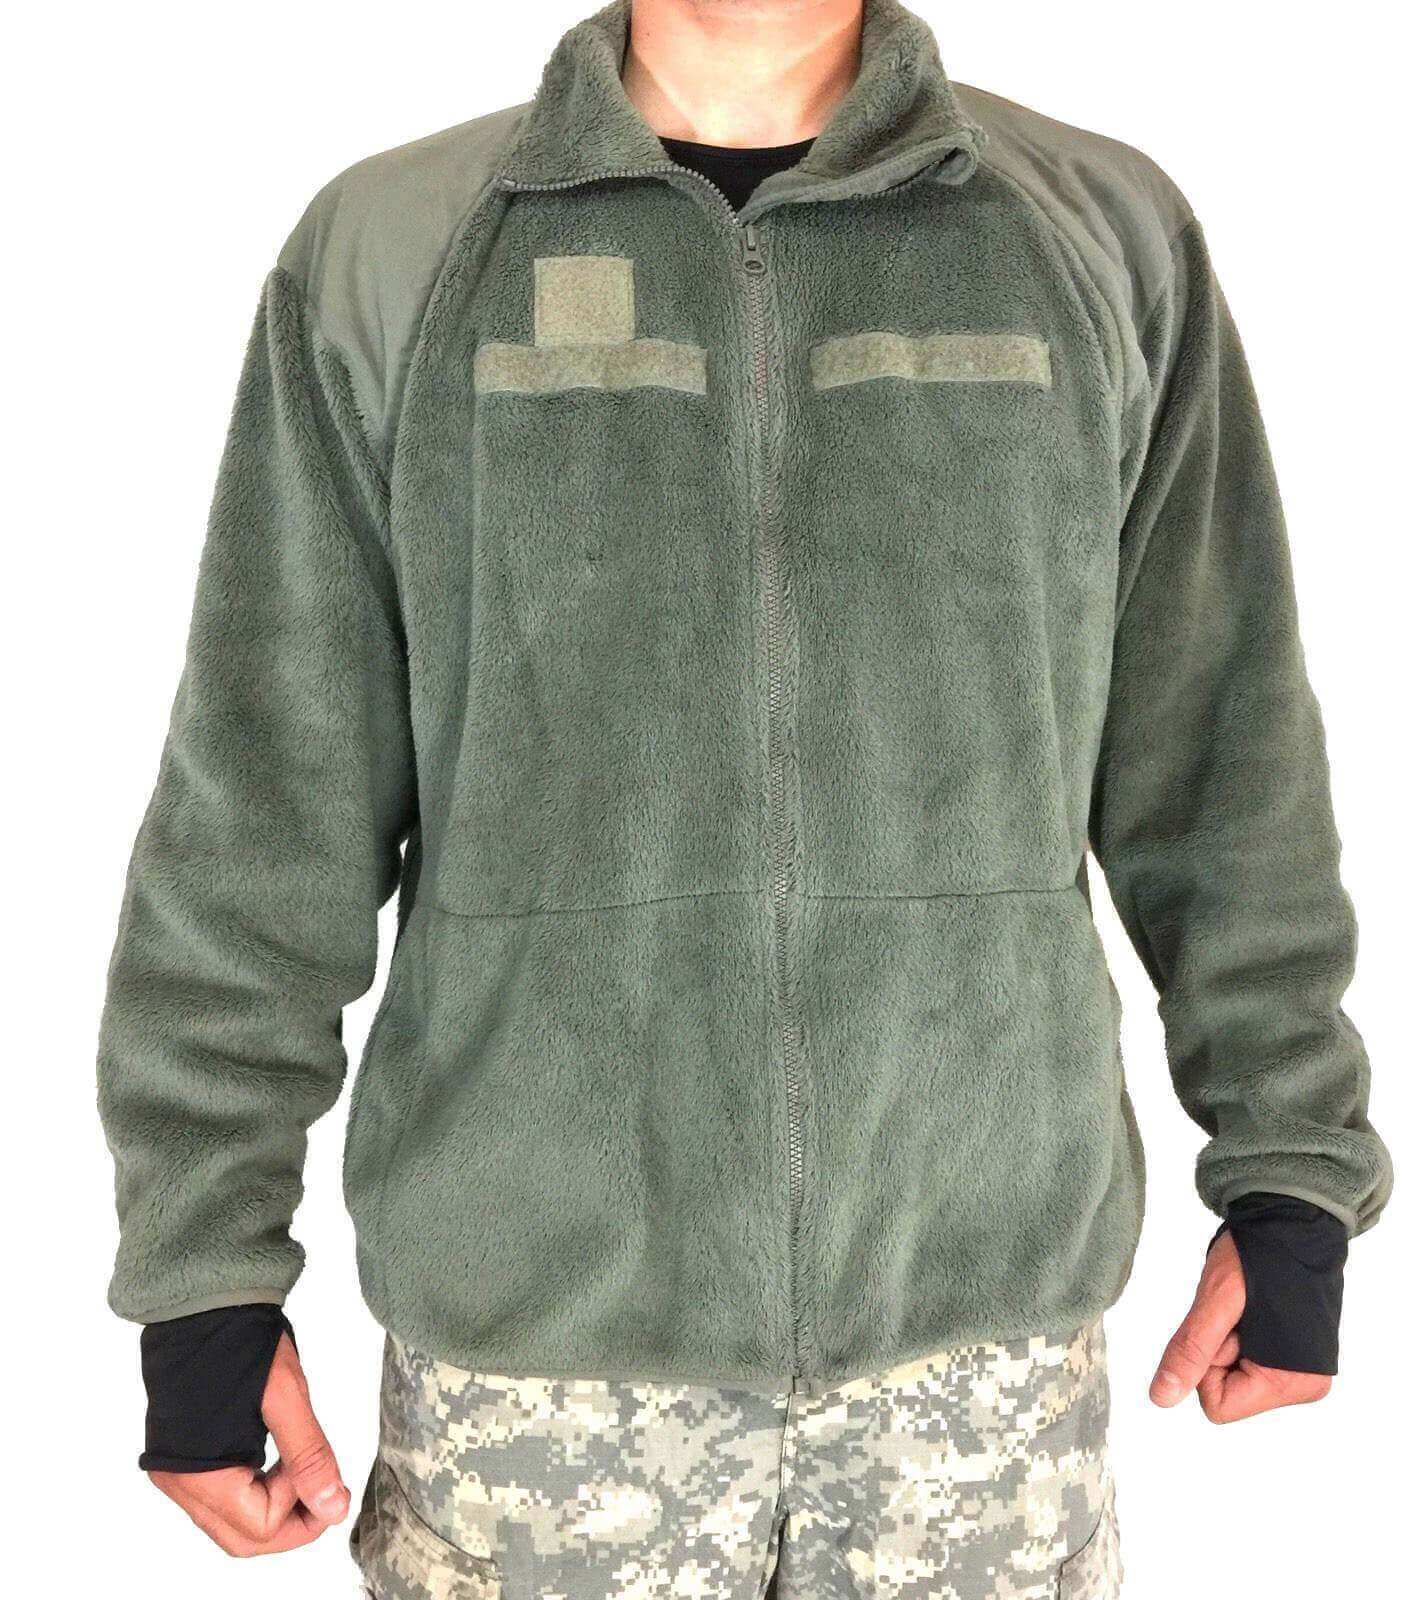 US Military Army Gen 3 ACU Foliage Green Polartec Fleece Jacket XS S M L XL MINT 